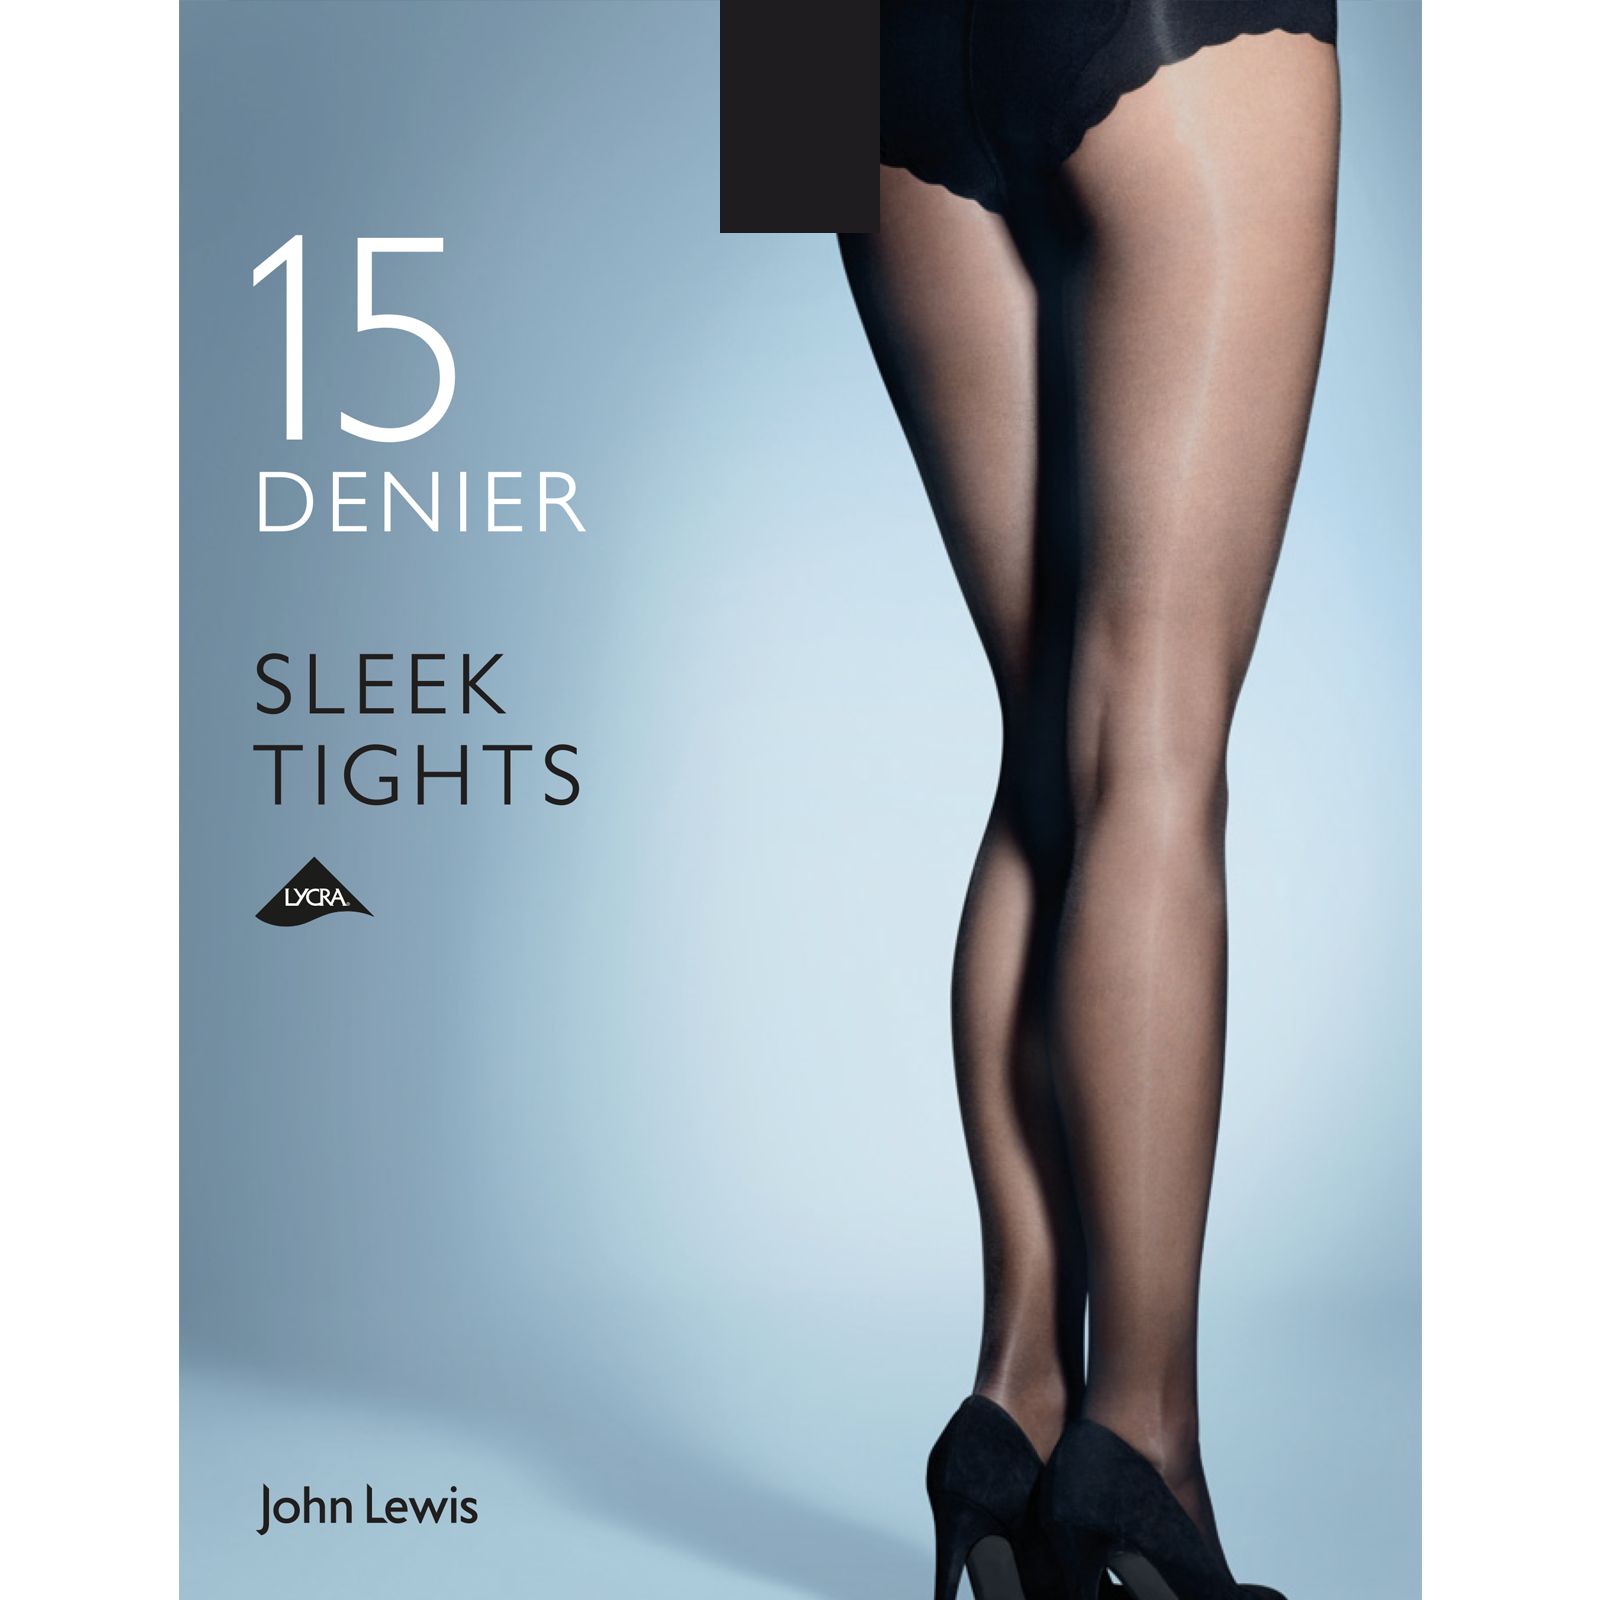 John Lewis 15 Denier Gloss Body Shaper Tights, Black, S